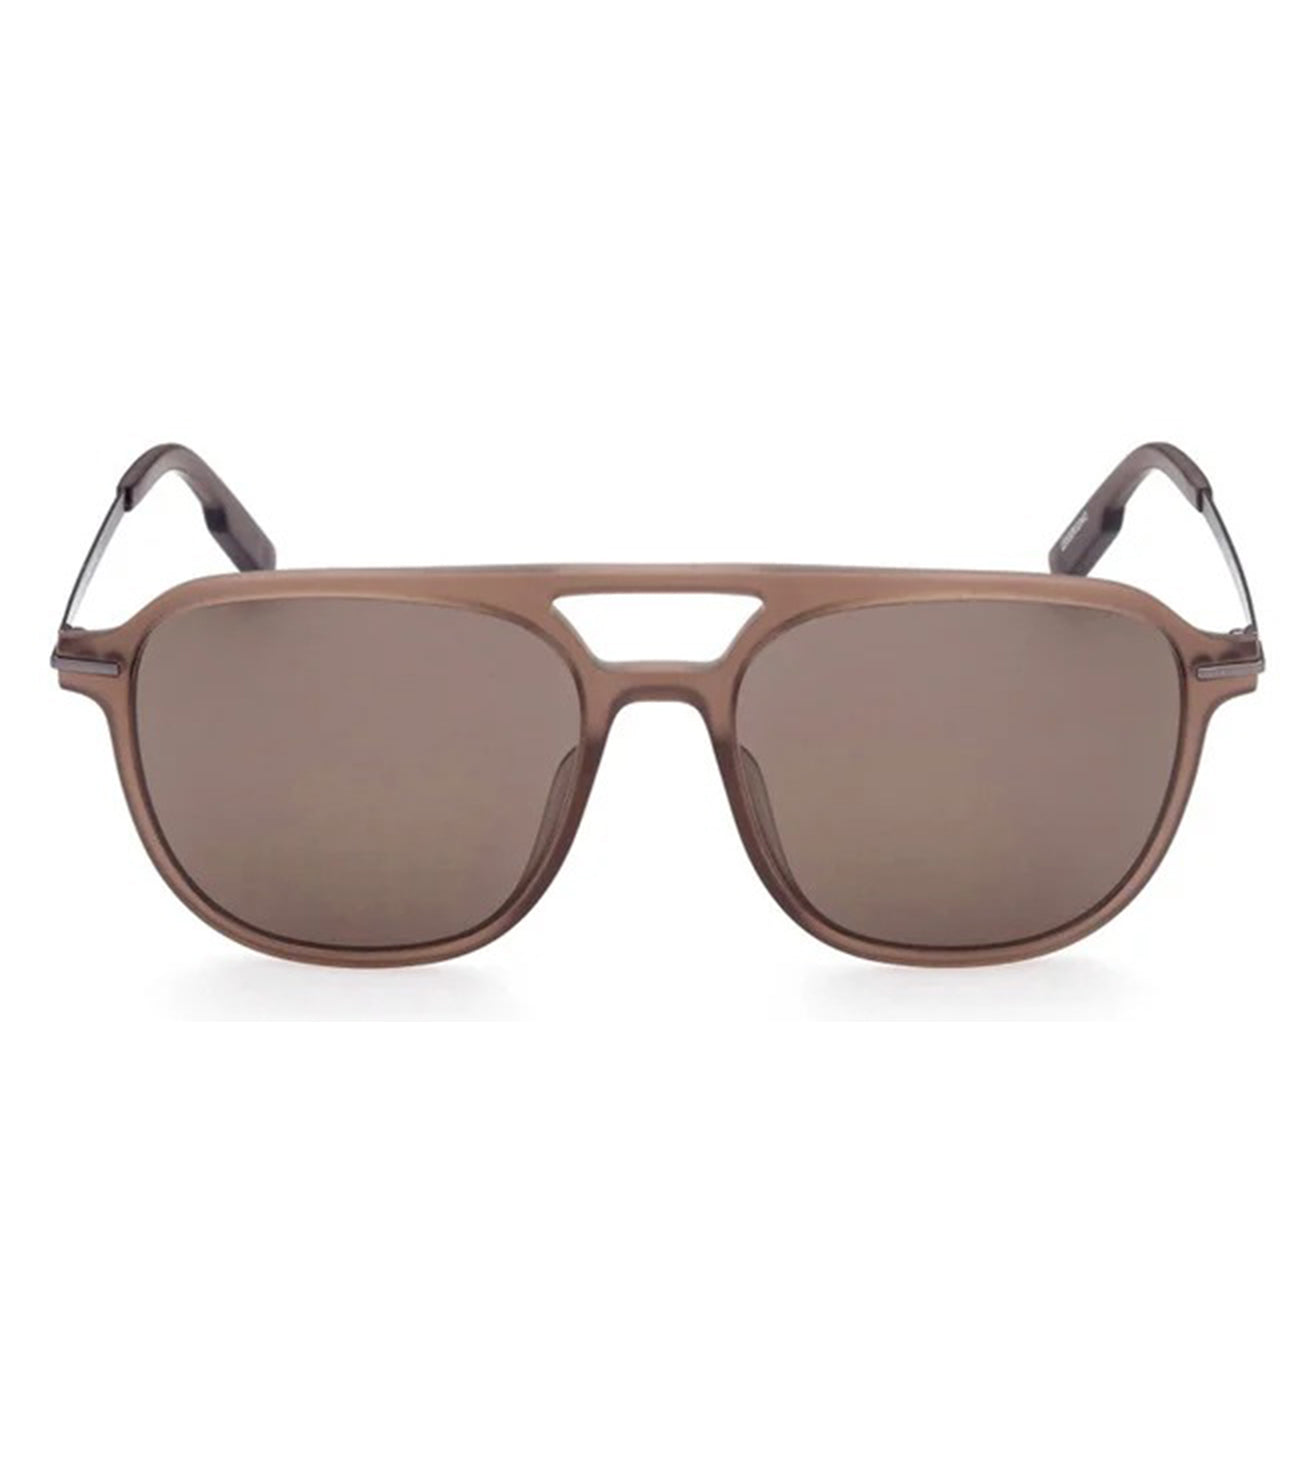 Zegna Men's Brown Aviator Sunglasses